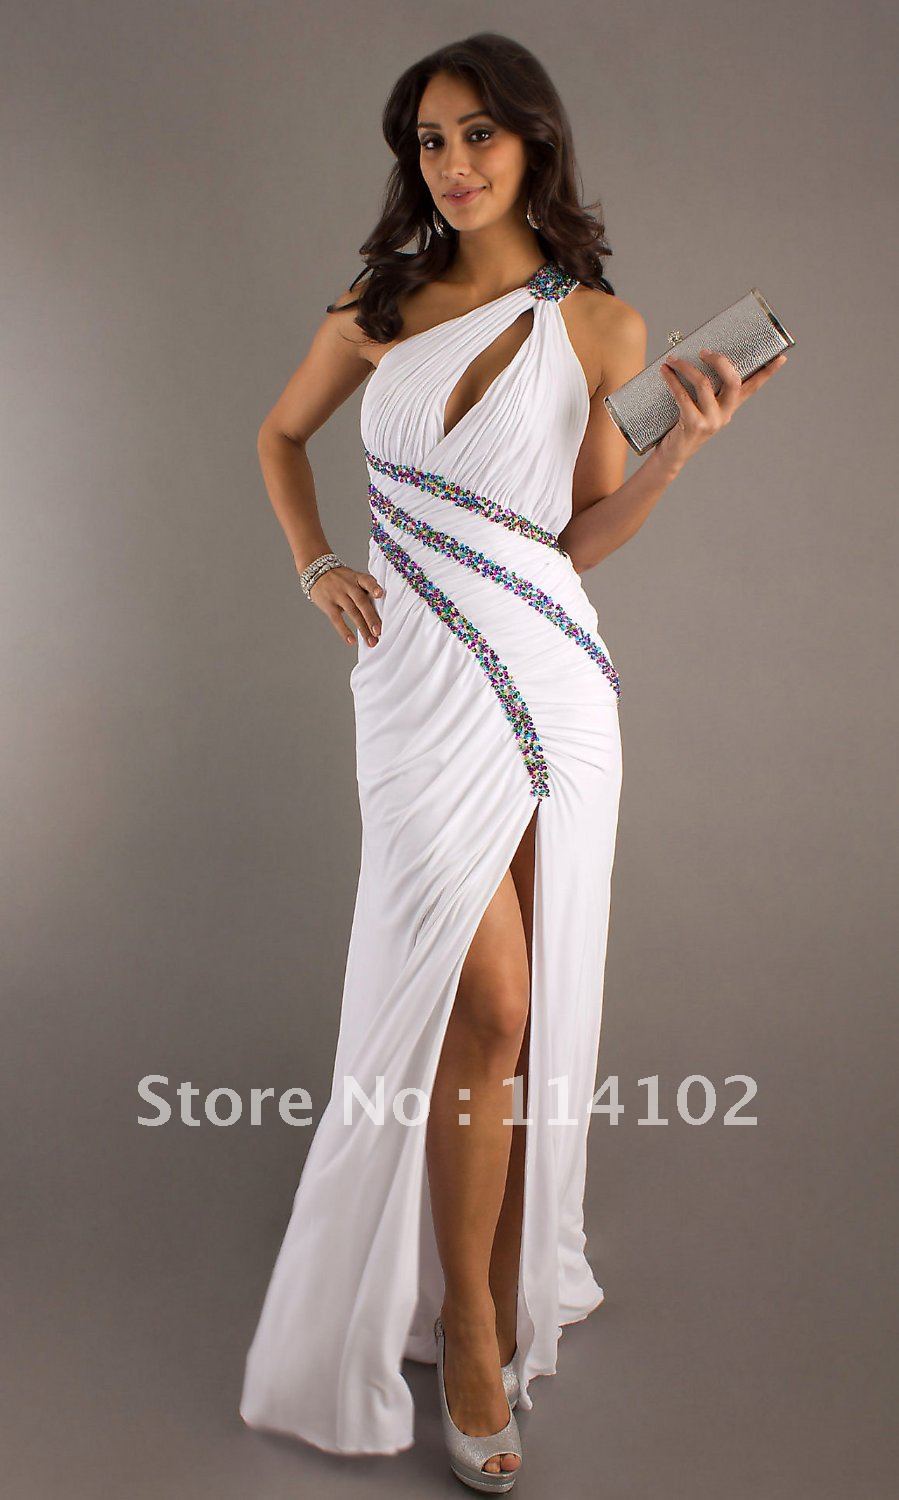 Stunning Party Dresses - Ocodea.com